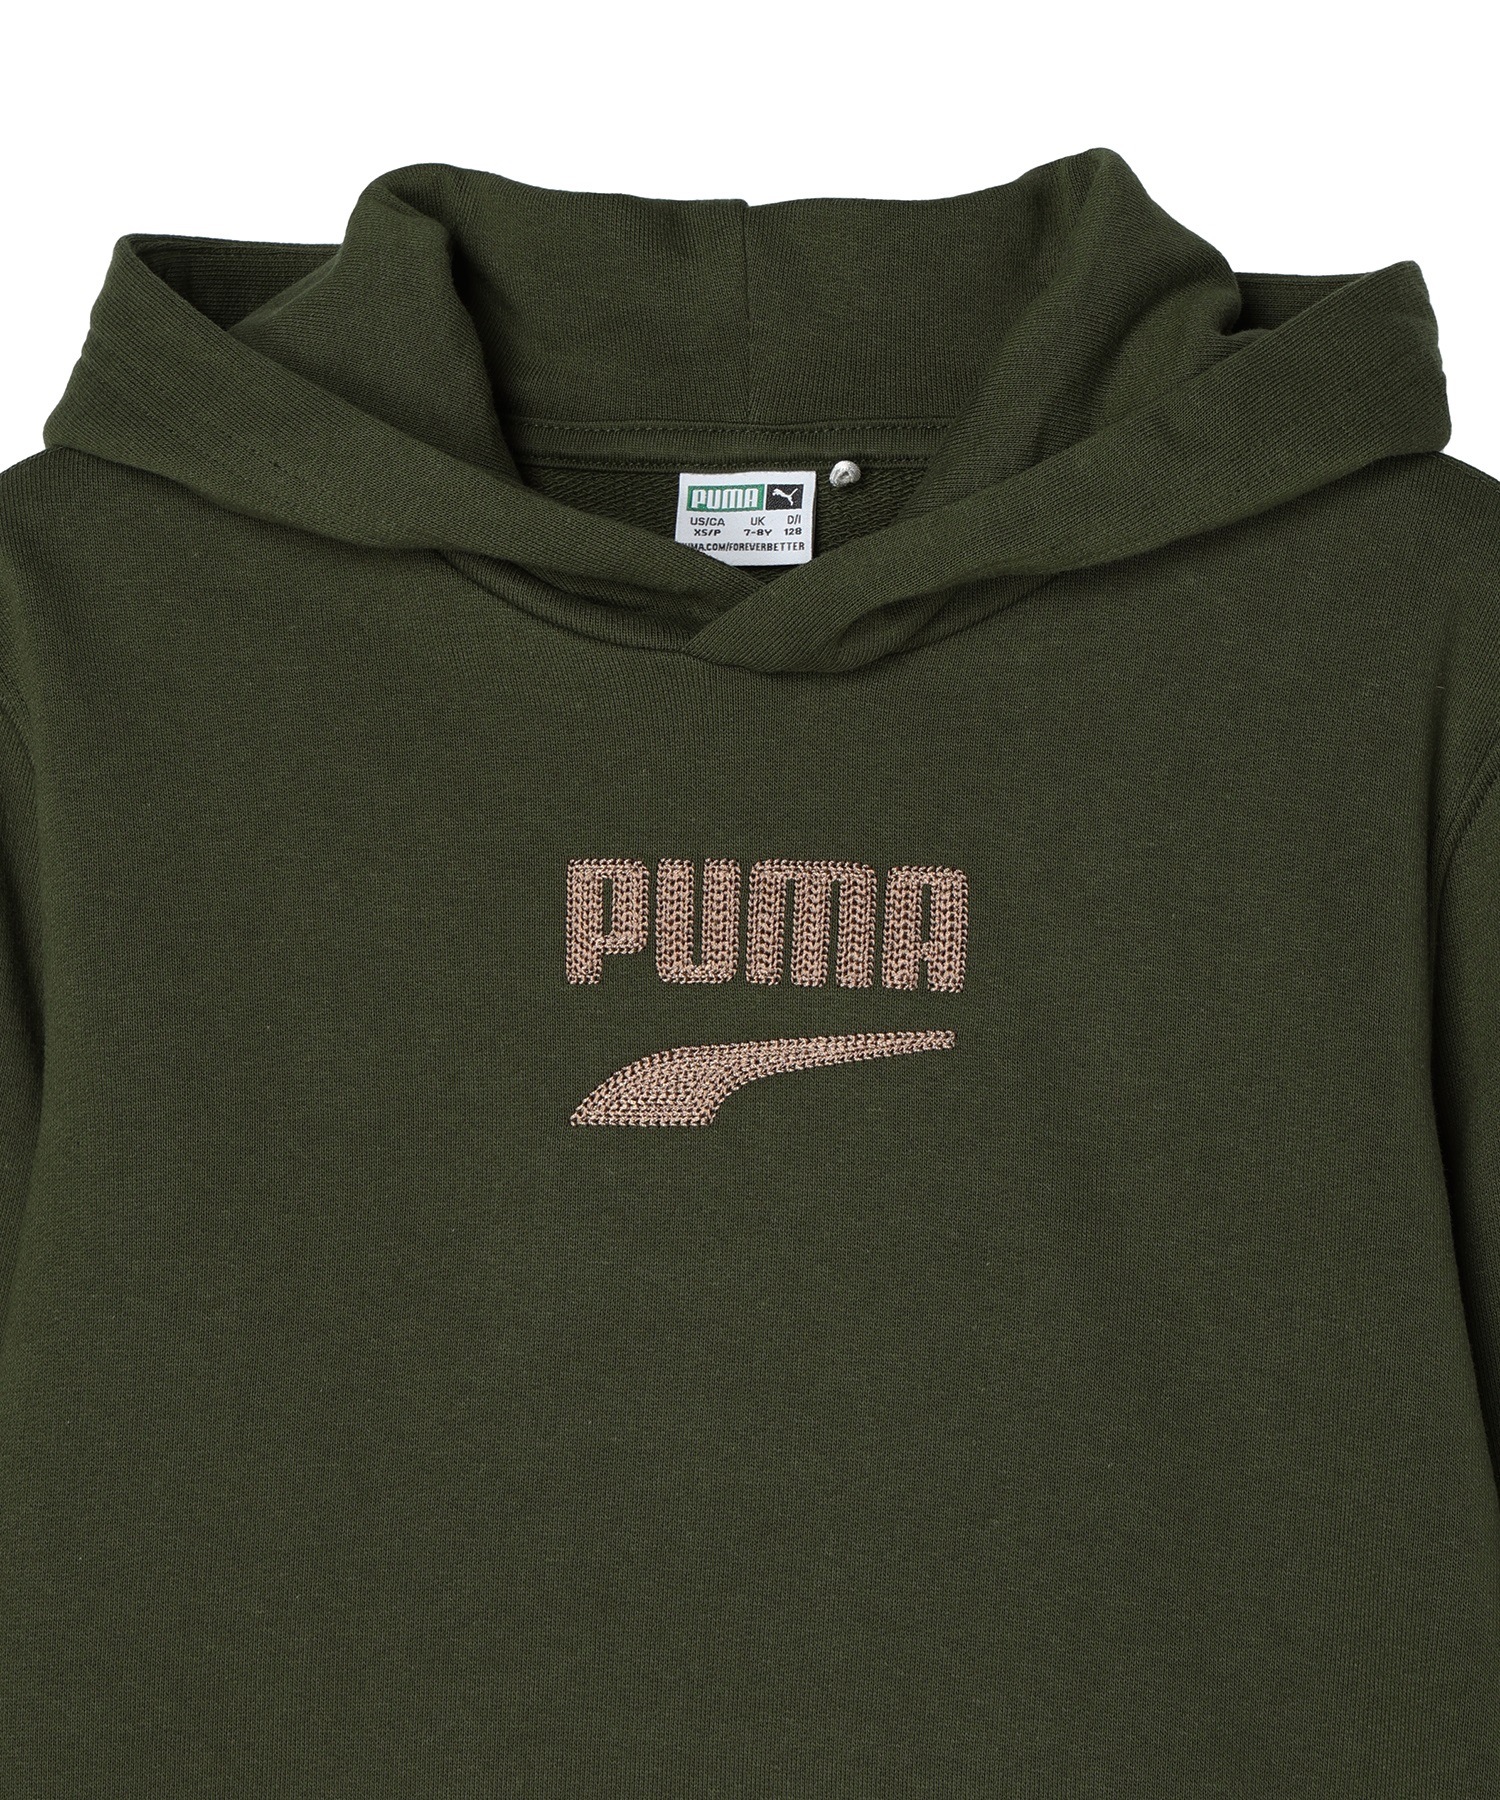 PUMA プーマ LOGO 621595 キッズ パーカー(01-128)